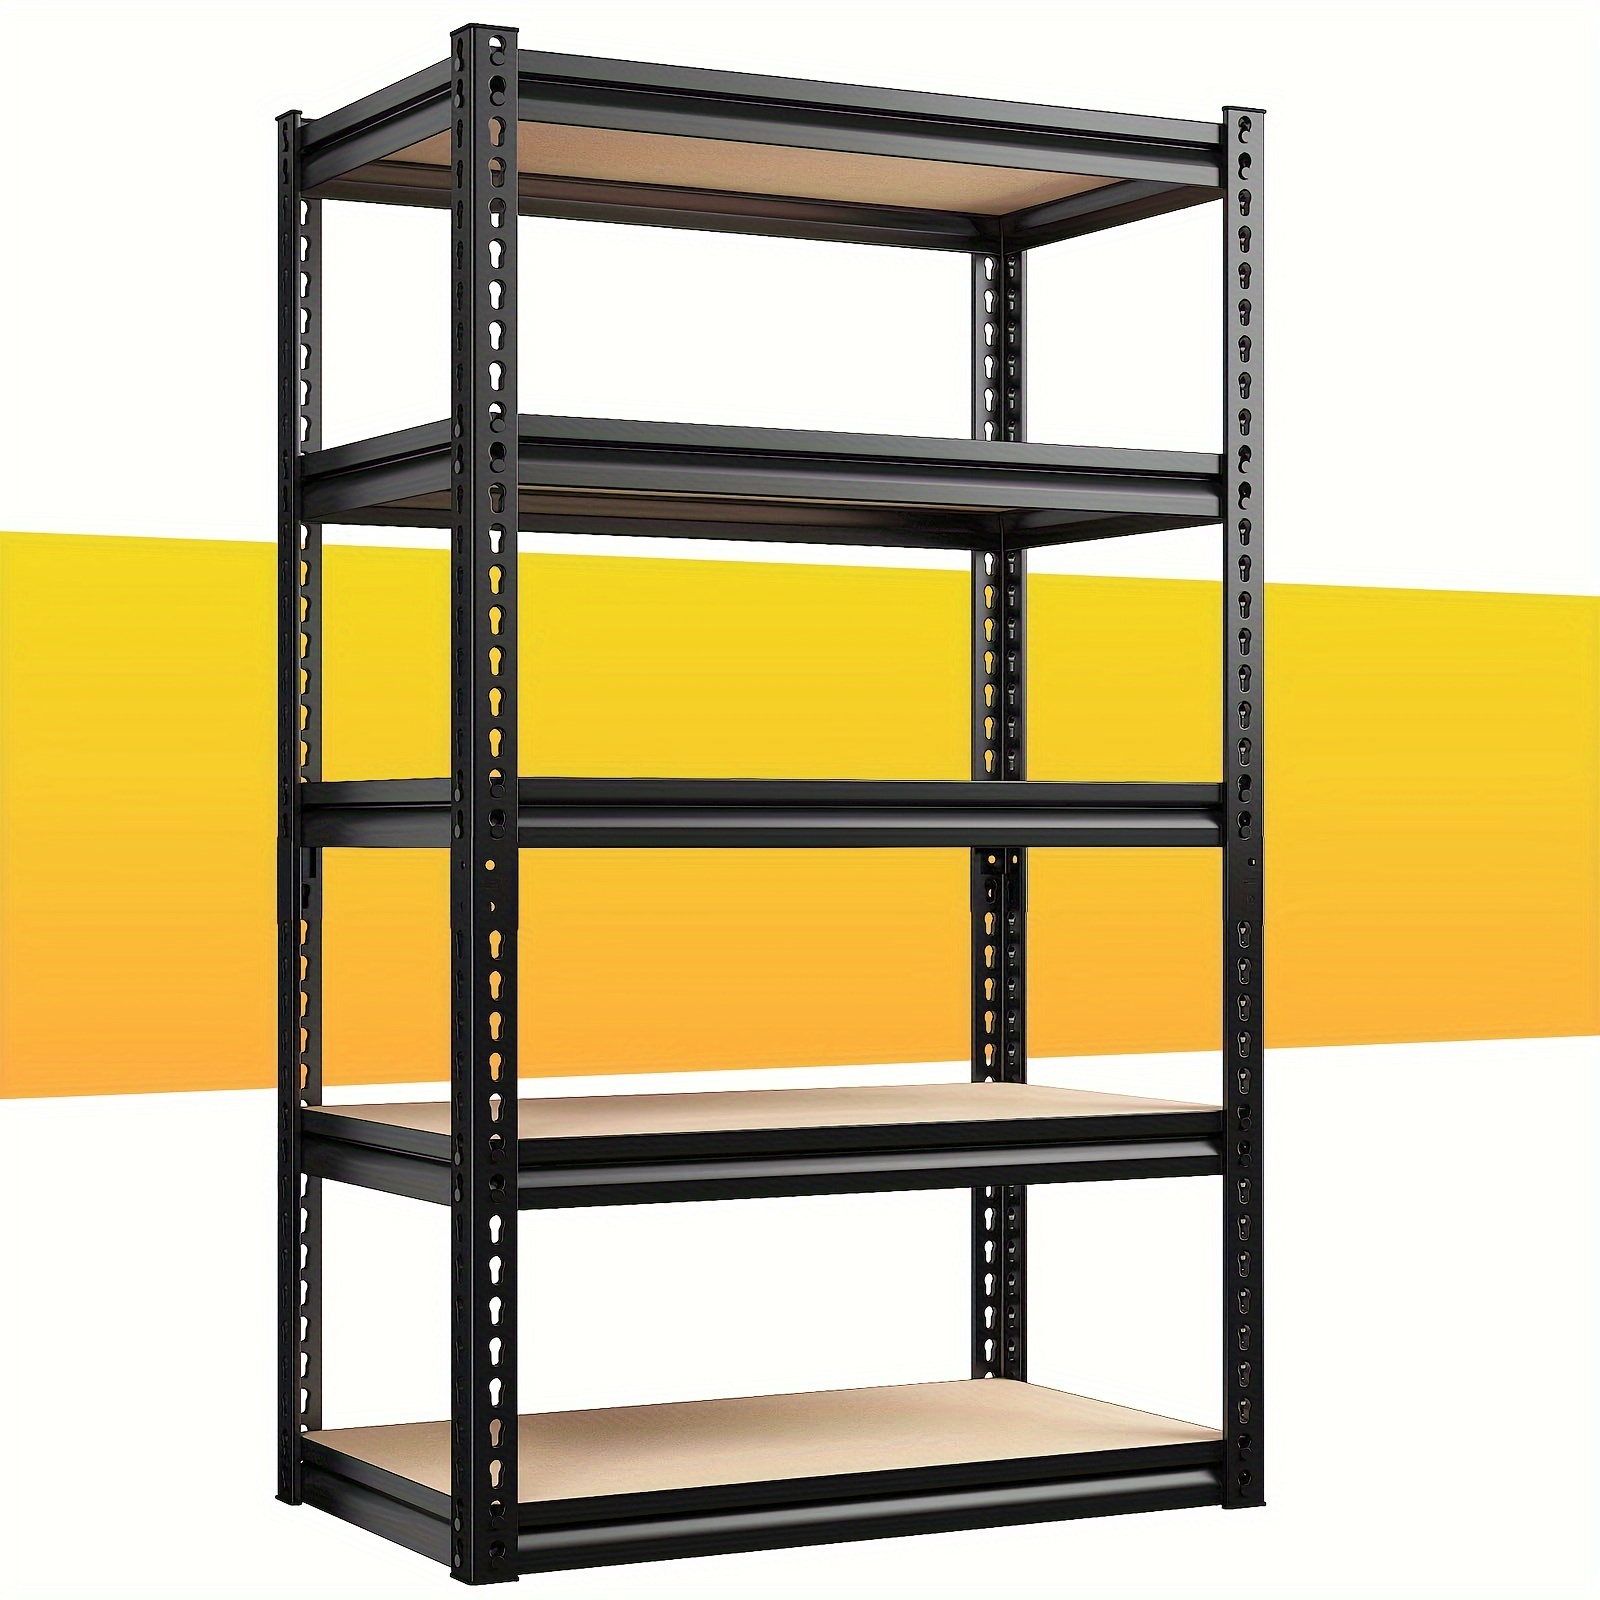 

Storage Shelves 5 Tier Garage Shelving Load 1520lbs Garage Storage Shelves, Shelving Units And Storage Adjustable Heavy Duty Shelving Utility Rack Shelf For Pantry 59.8" H X 27.6" W X 11.8" D